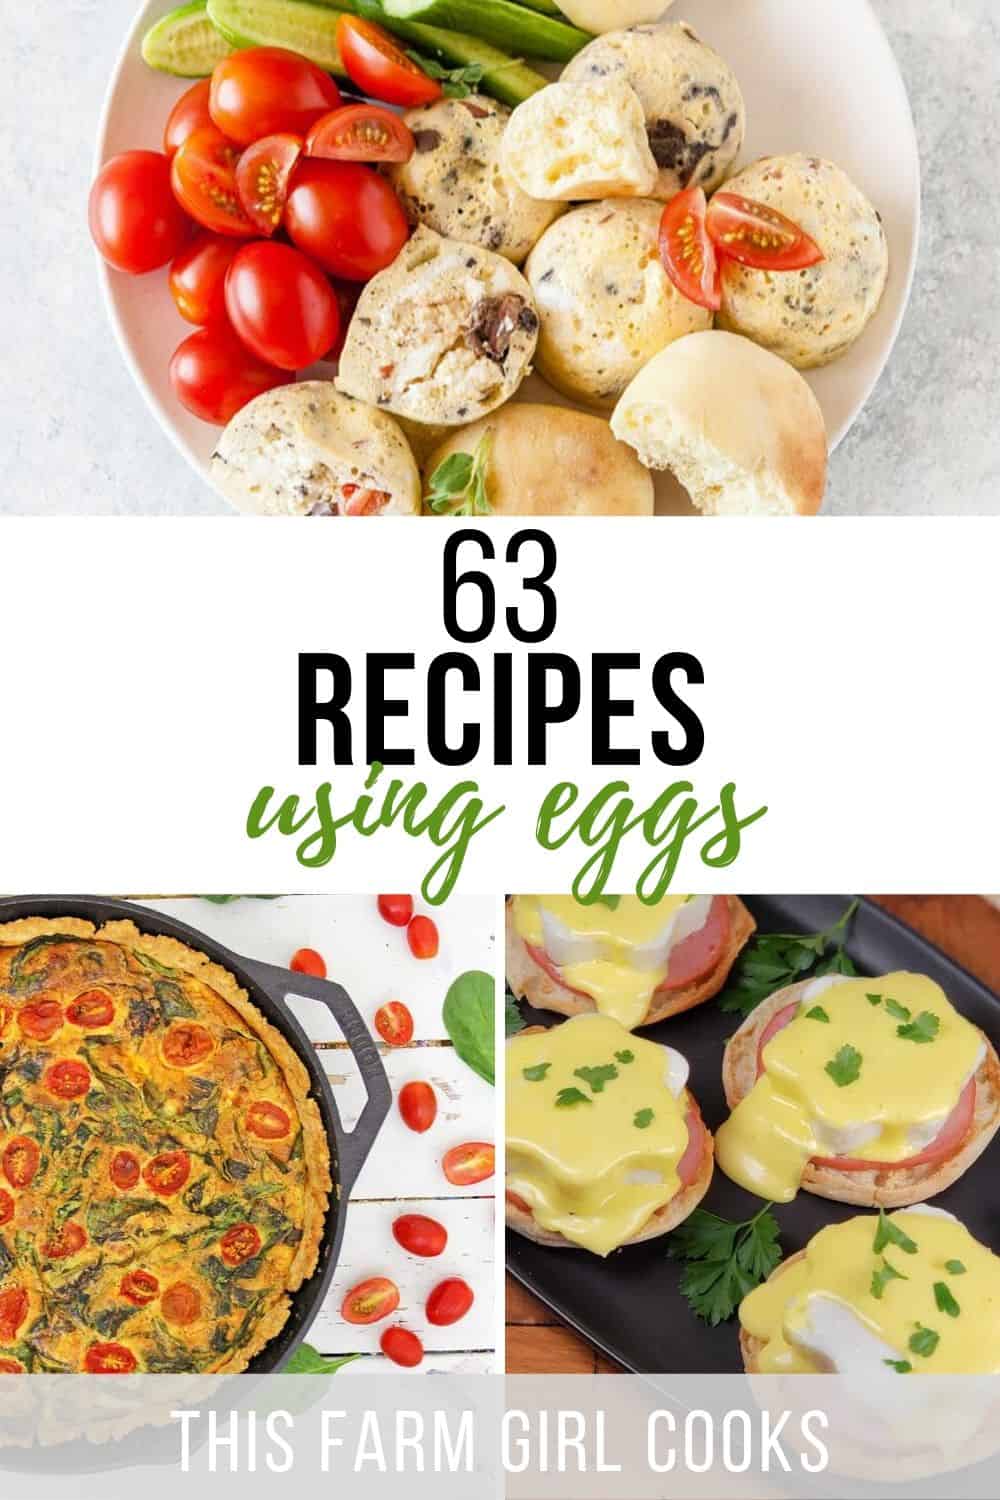 recipes using eggs